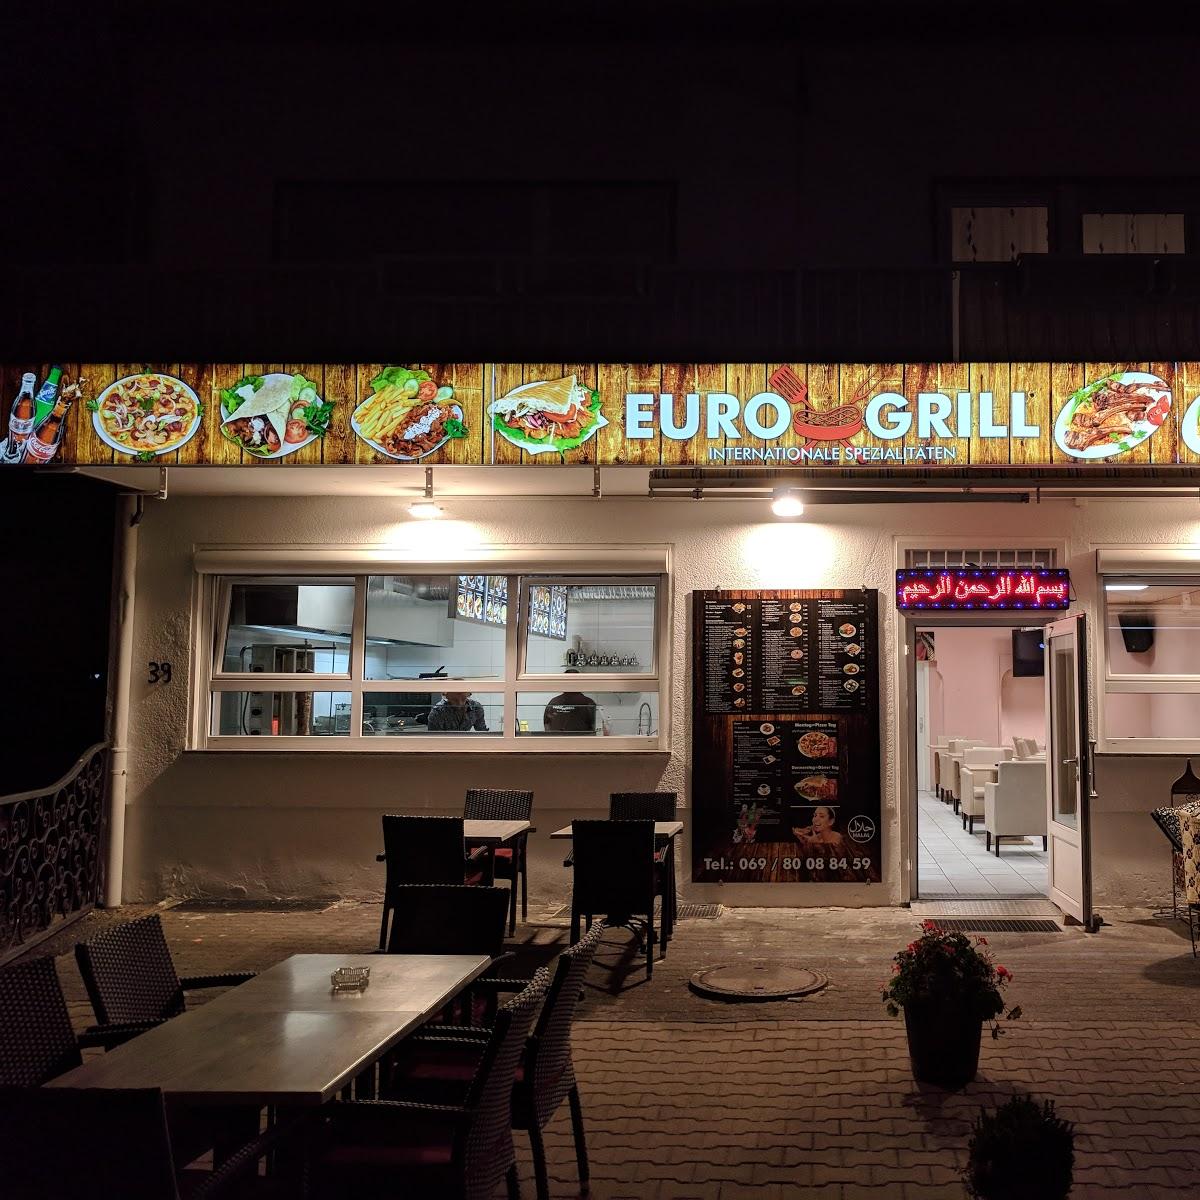 Restaurant "Euro Grill" in Frankfurt am Main